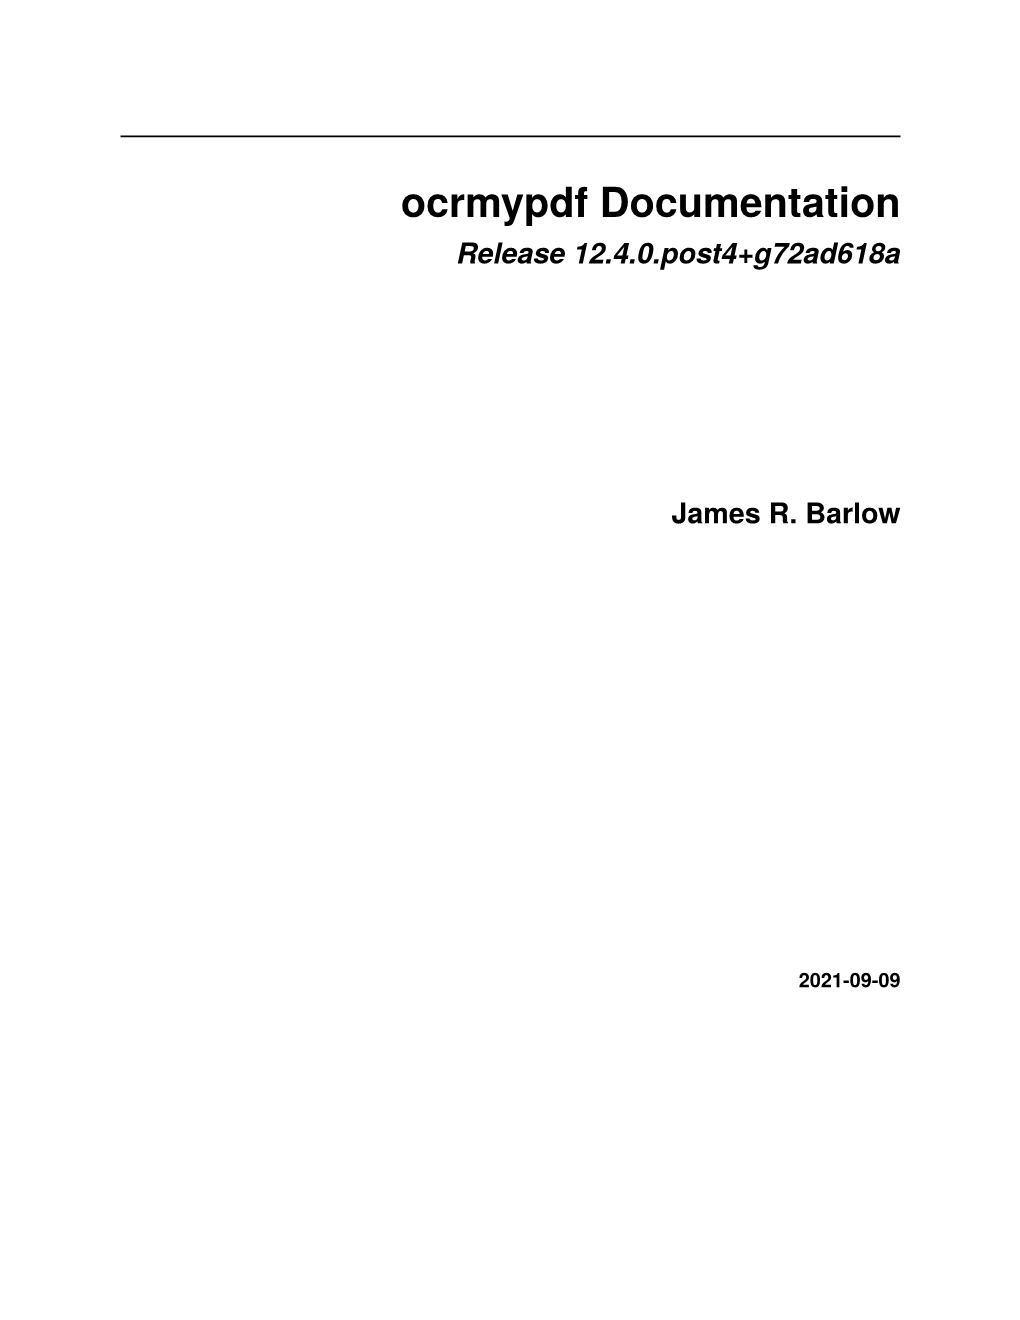 Ocrmypdf Documentation Release 12.4.0.Post4+G72ad618a